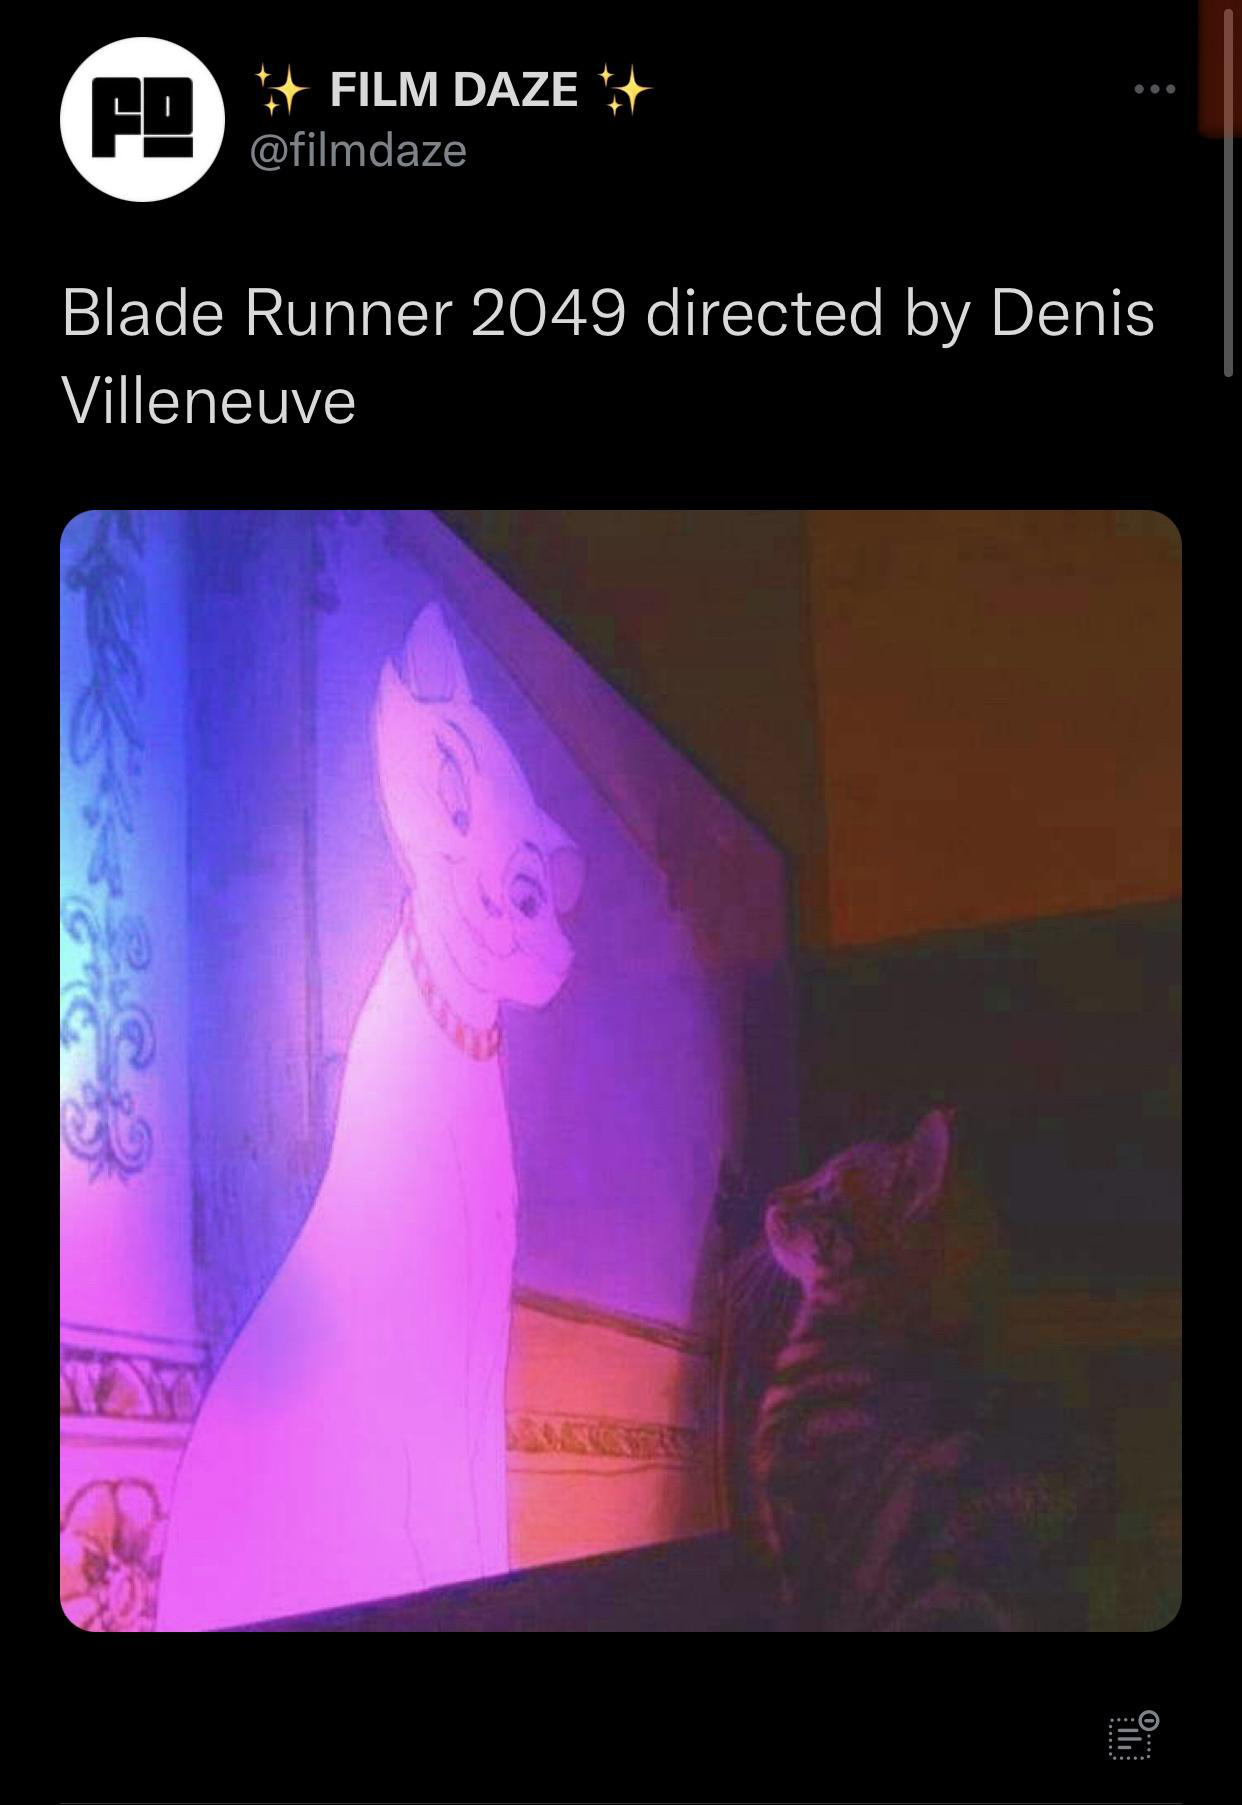 screenshot - Fd Film Daze Blade Runner 2049 directed by Denis Villeneuve "I